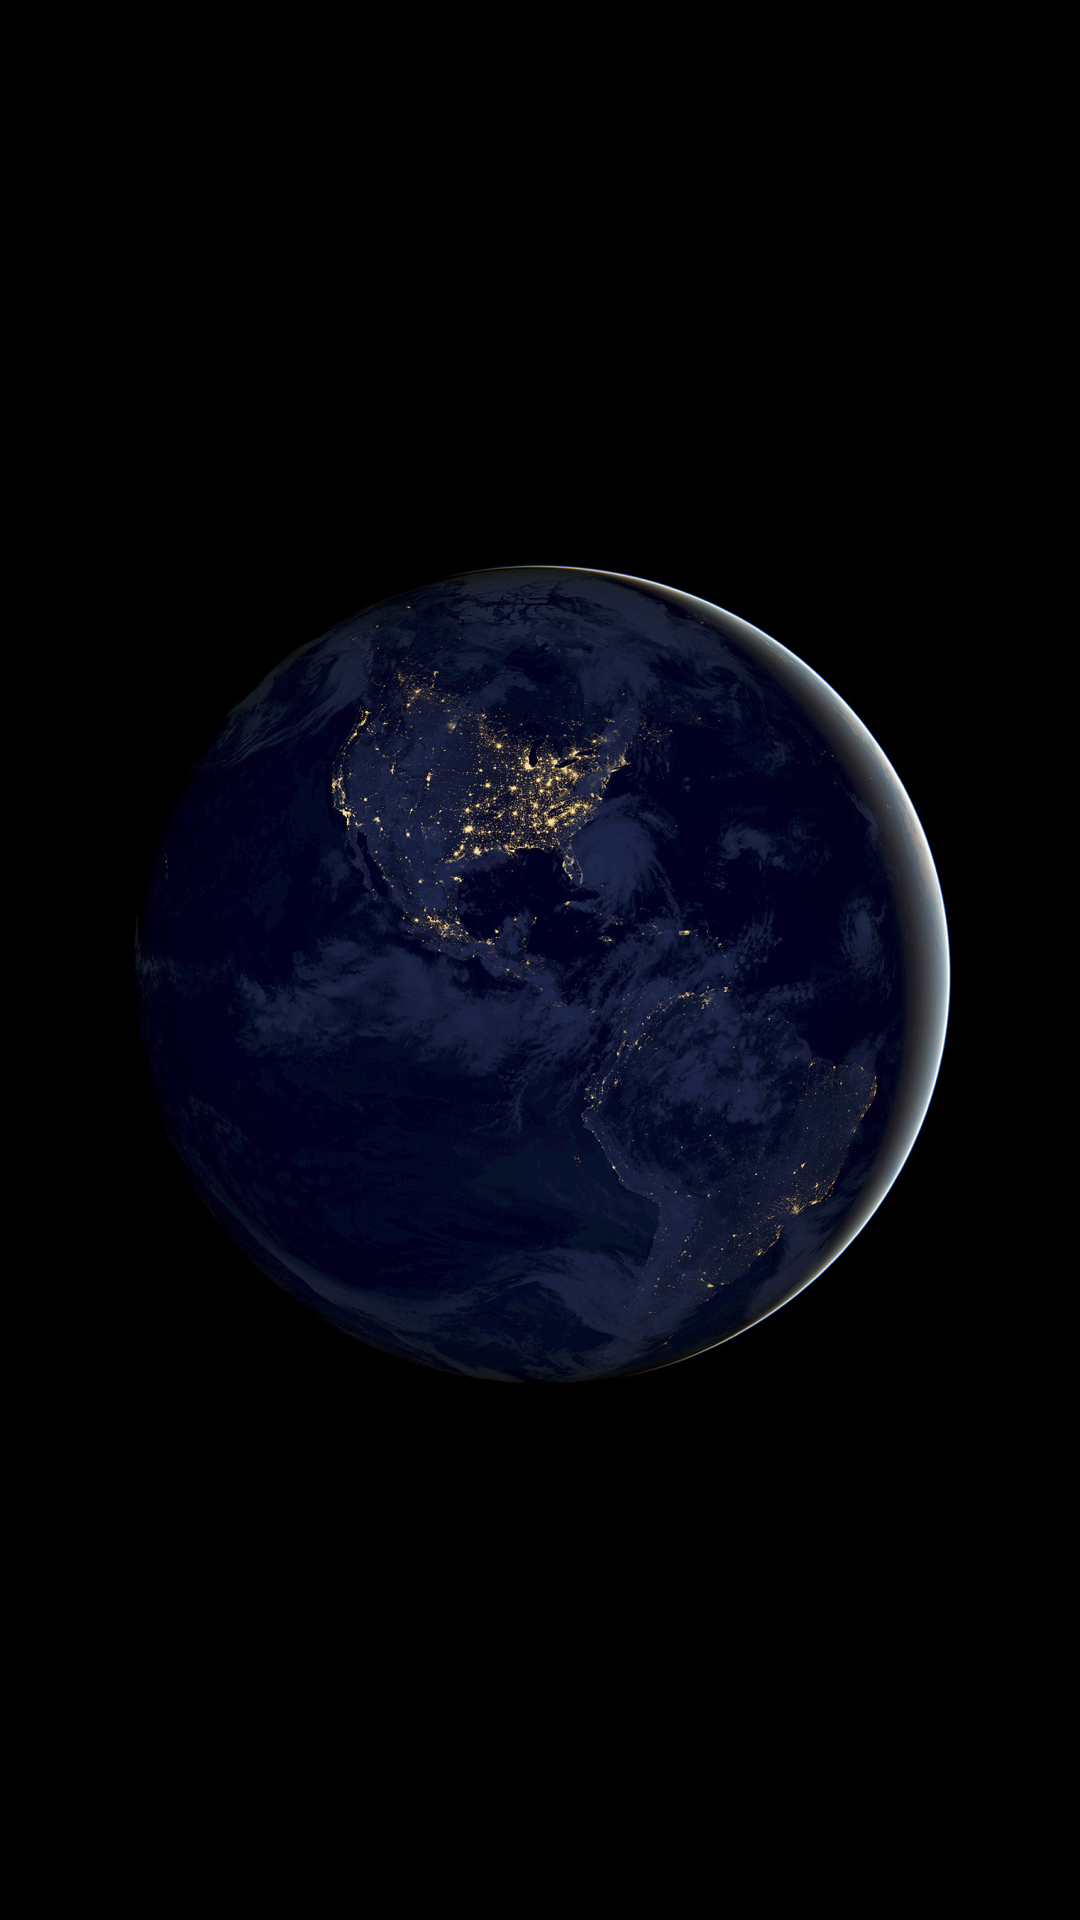 Earth Night iPhone Wallpaper | iDrop News